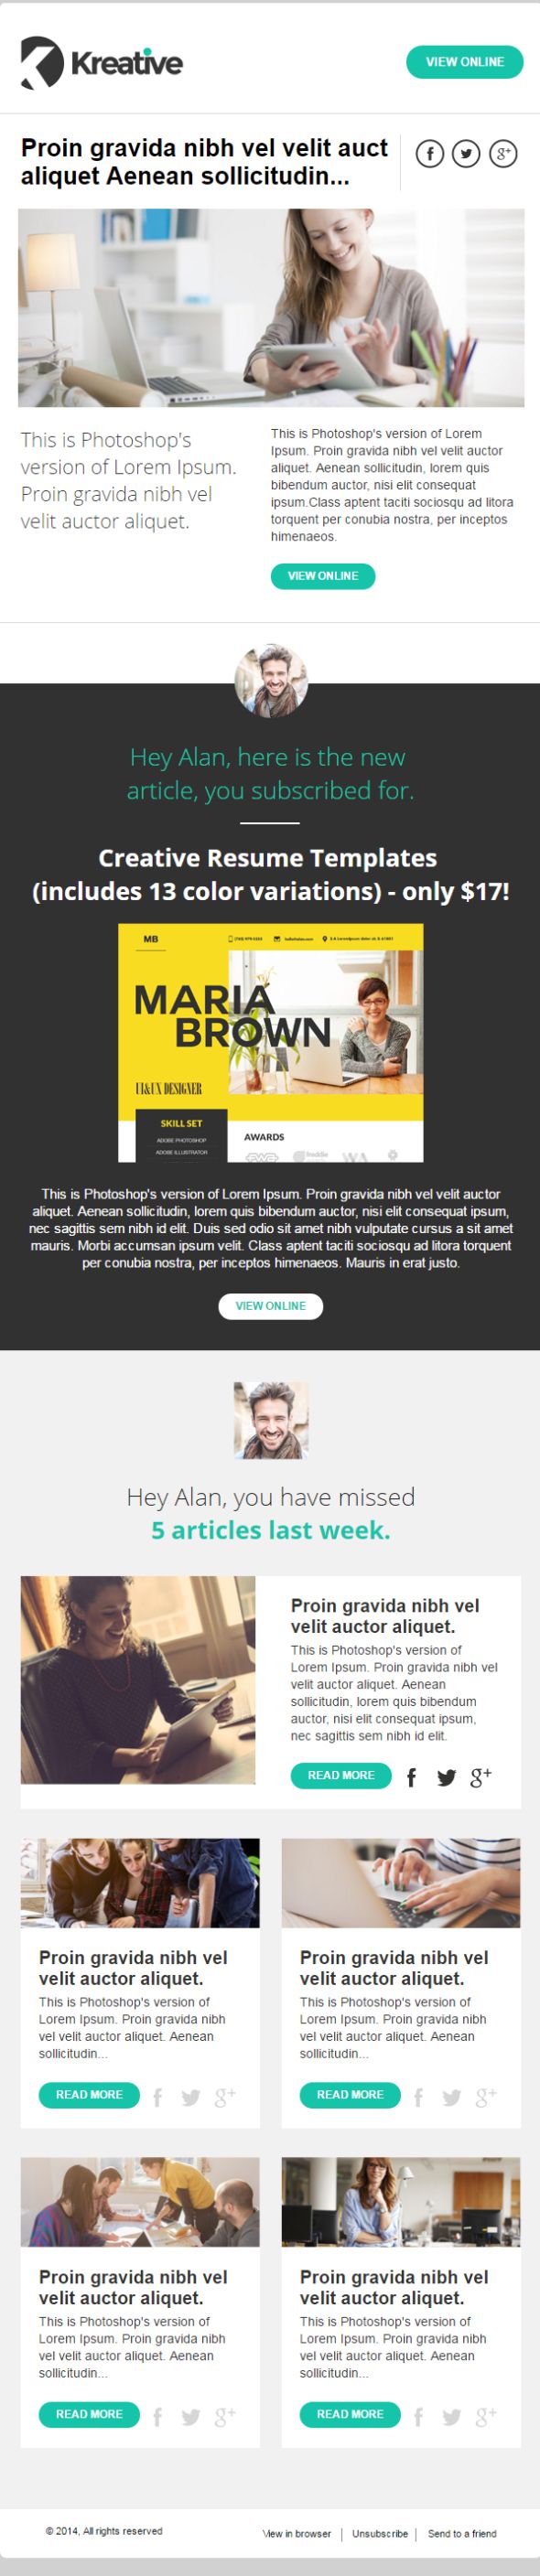 kreative-newsletter-template